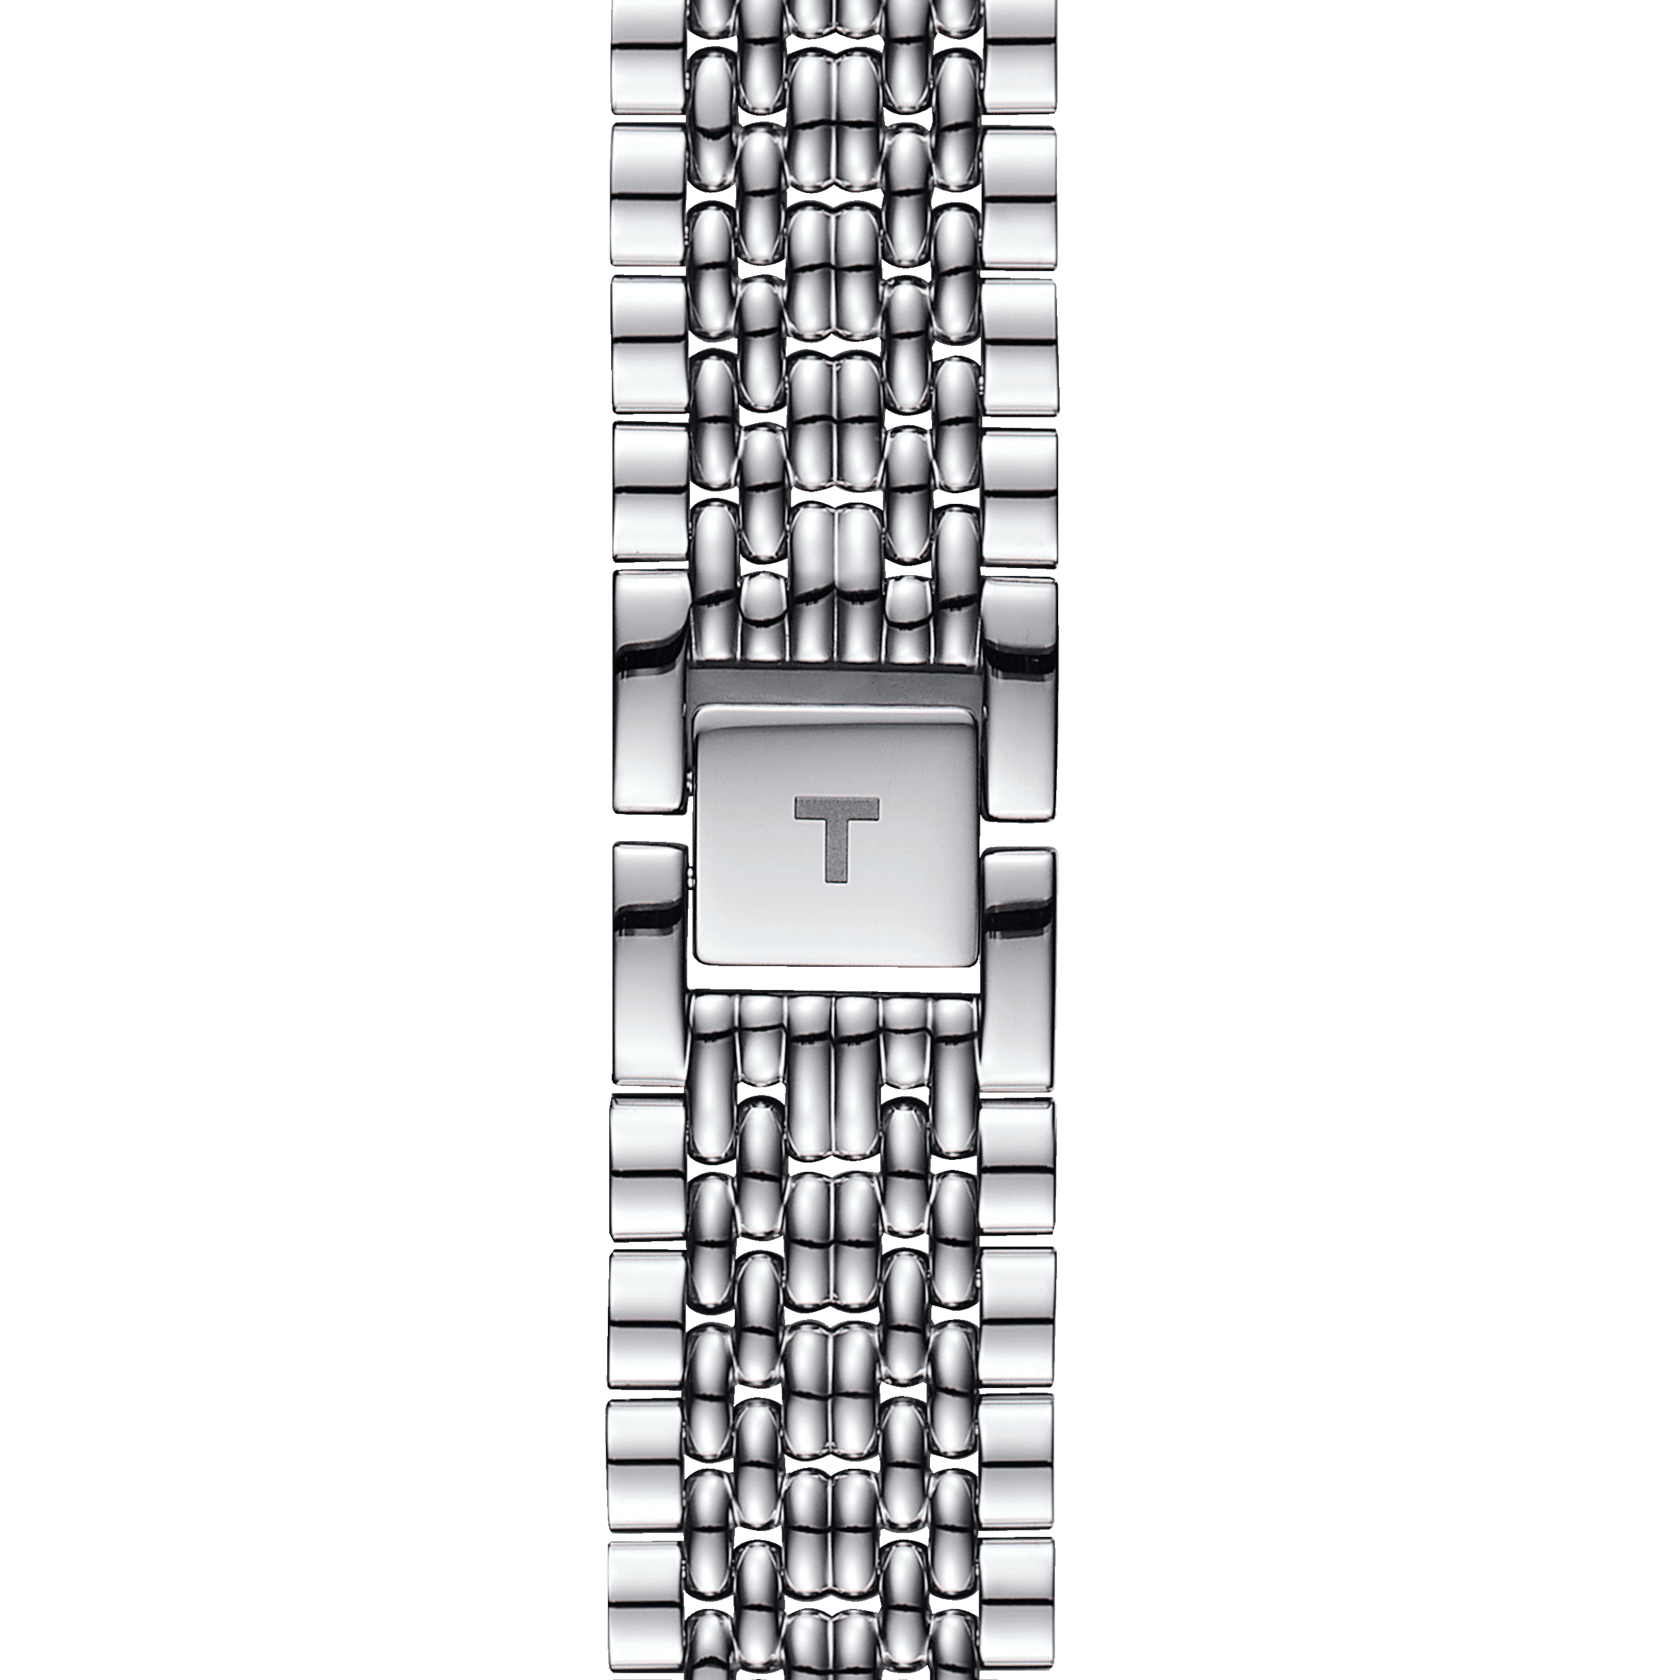 Tissot Everytime Medium, model #T109.410.11.033.00, at IJL Since 1937